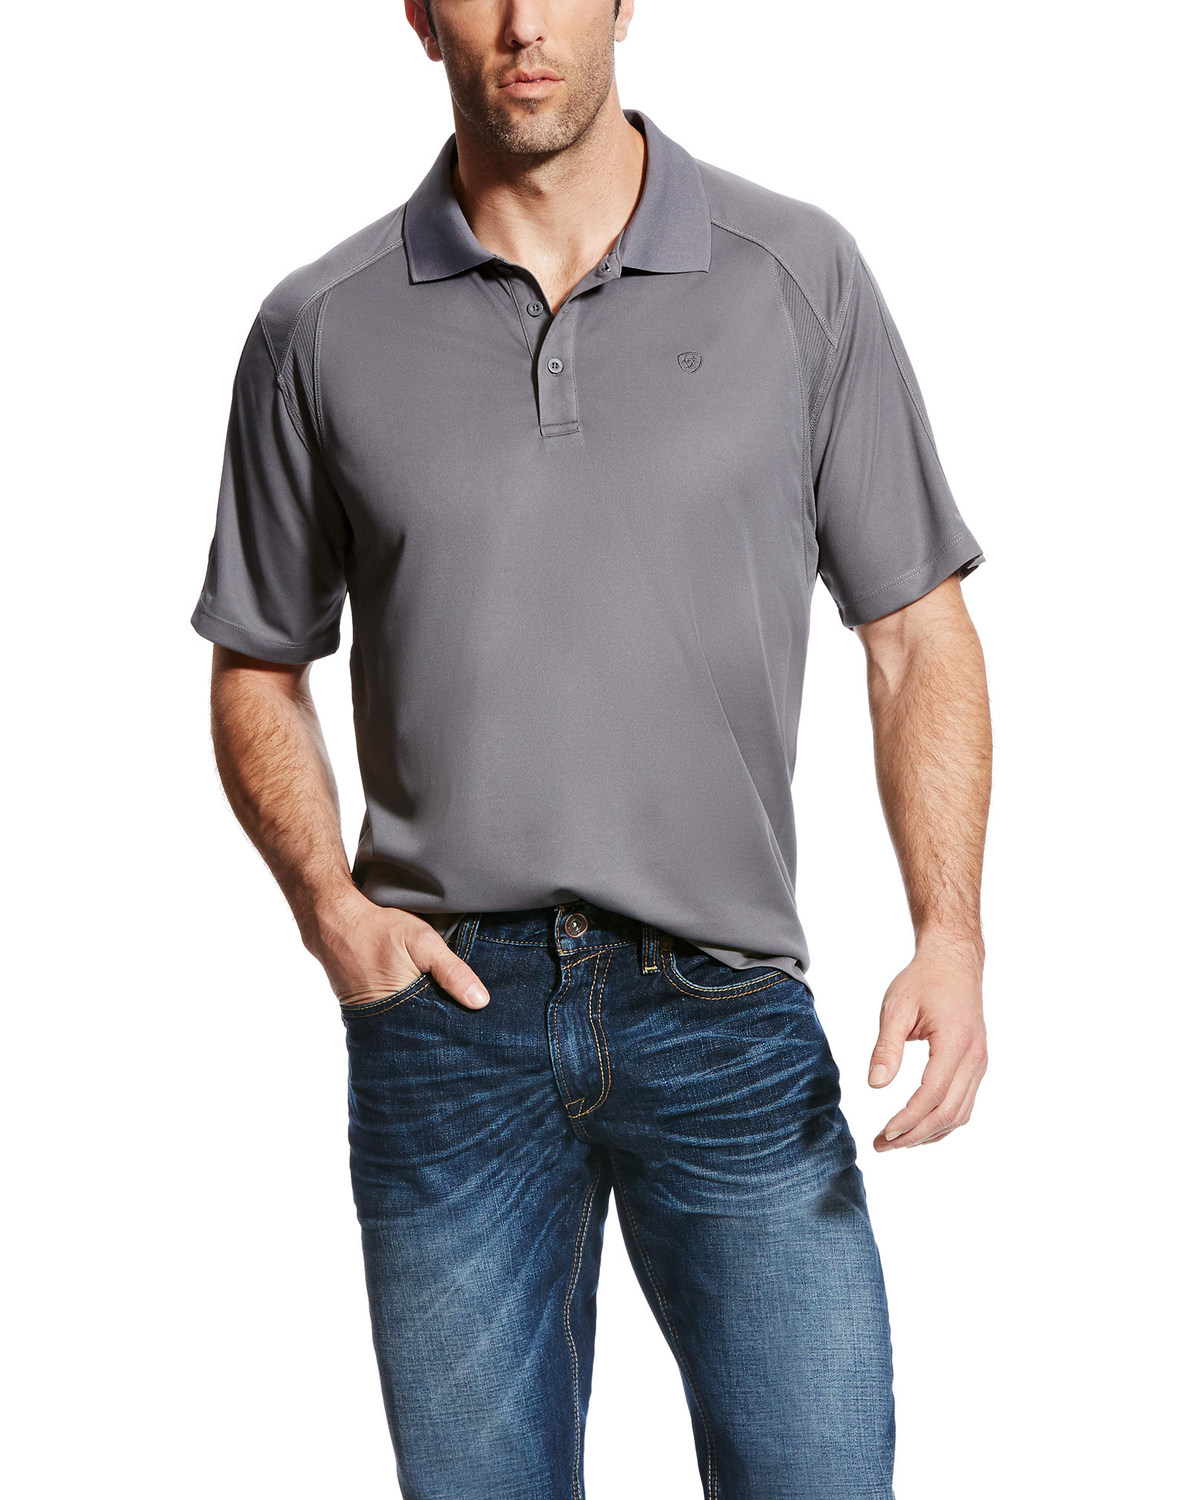 Ariat Men's Grey AC Pique Short Sleeve Polo Shirt - Big